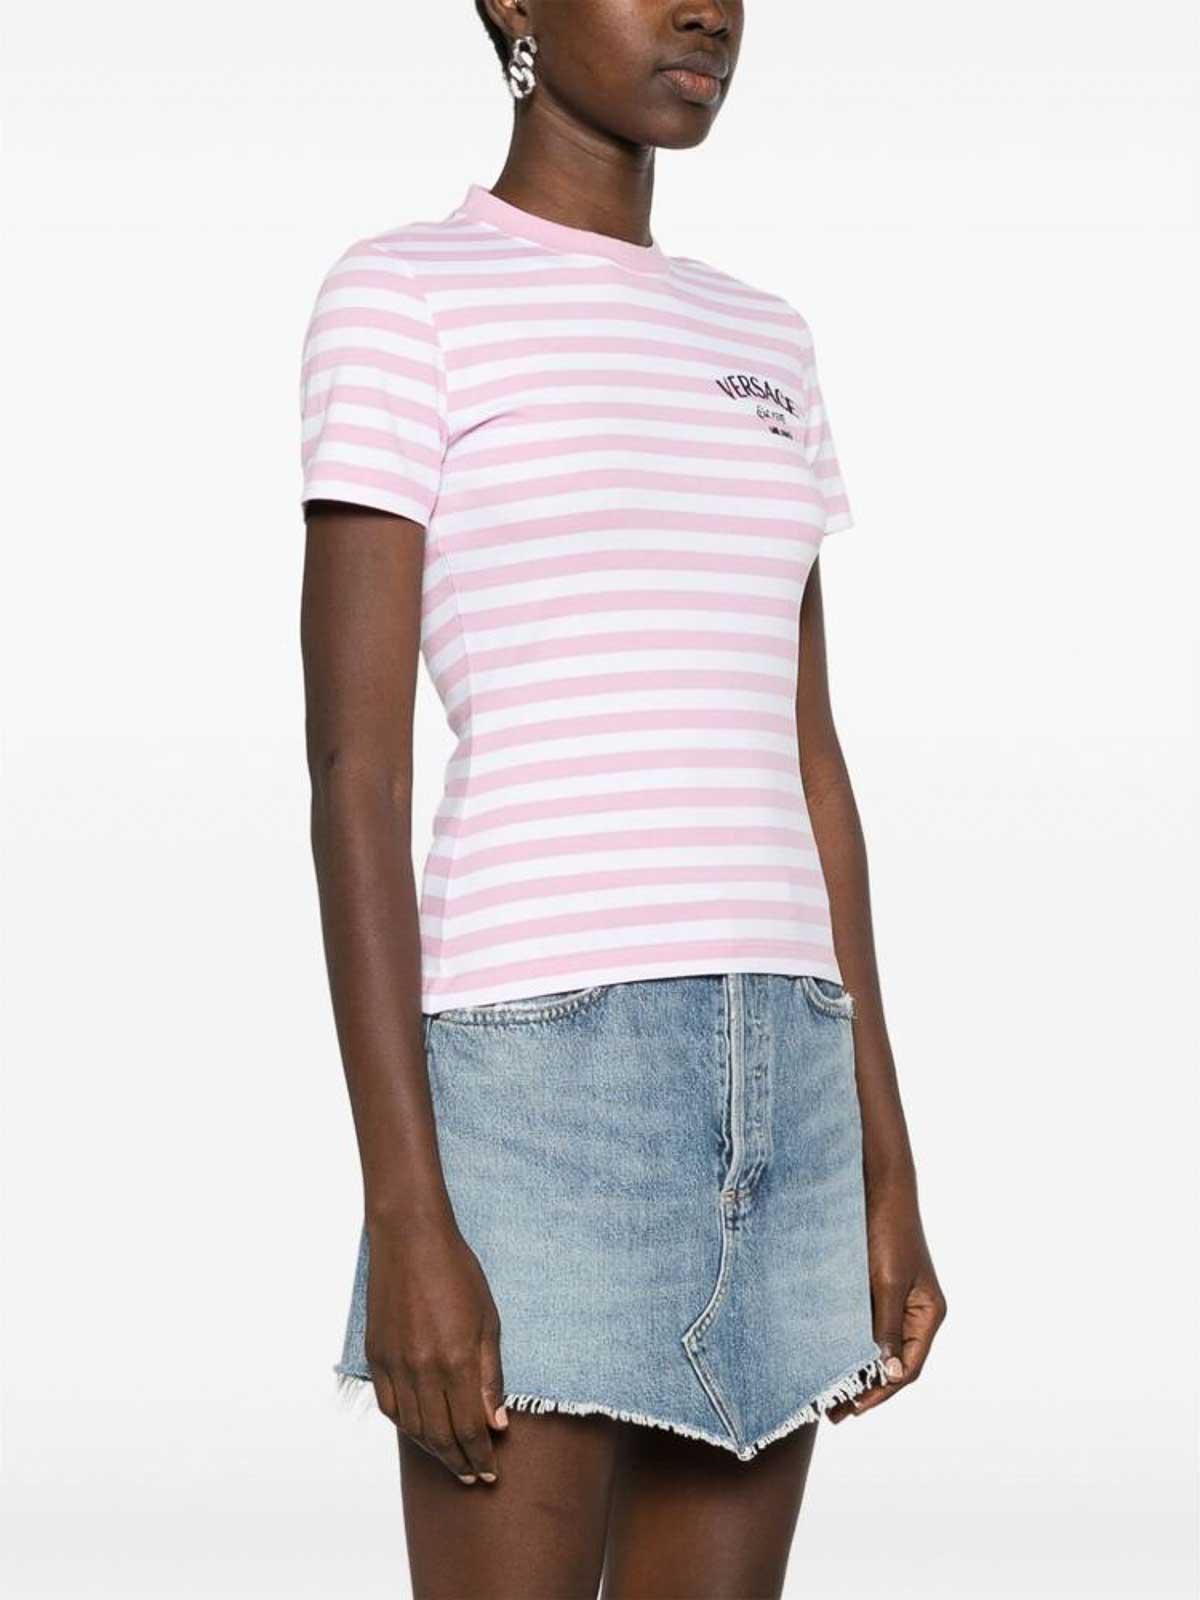 Shop Versace Whitepink Striped Logo T-shirt